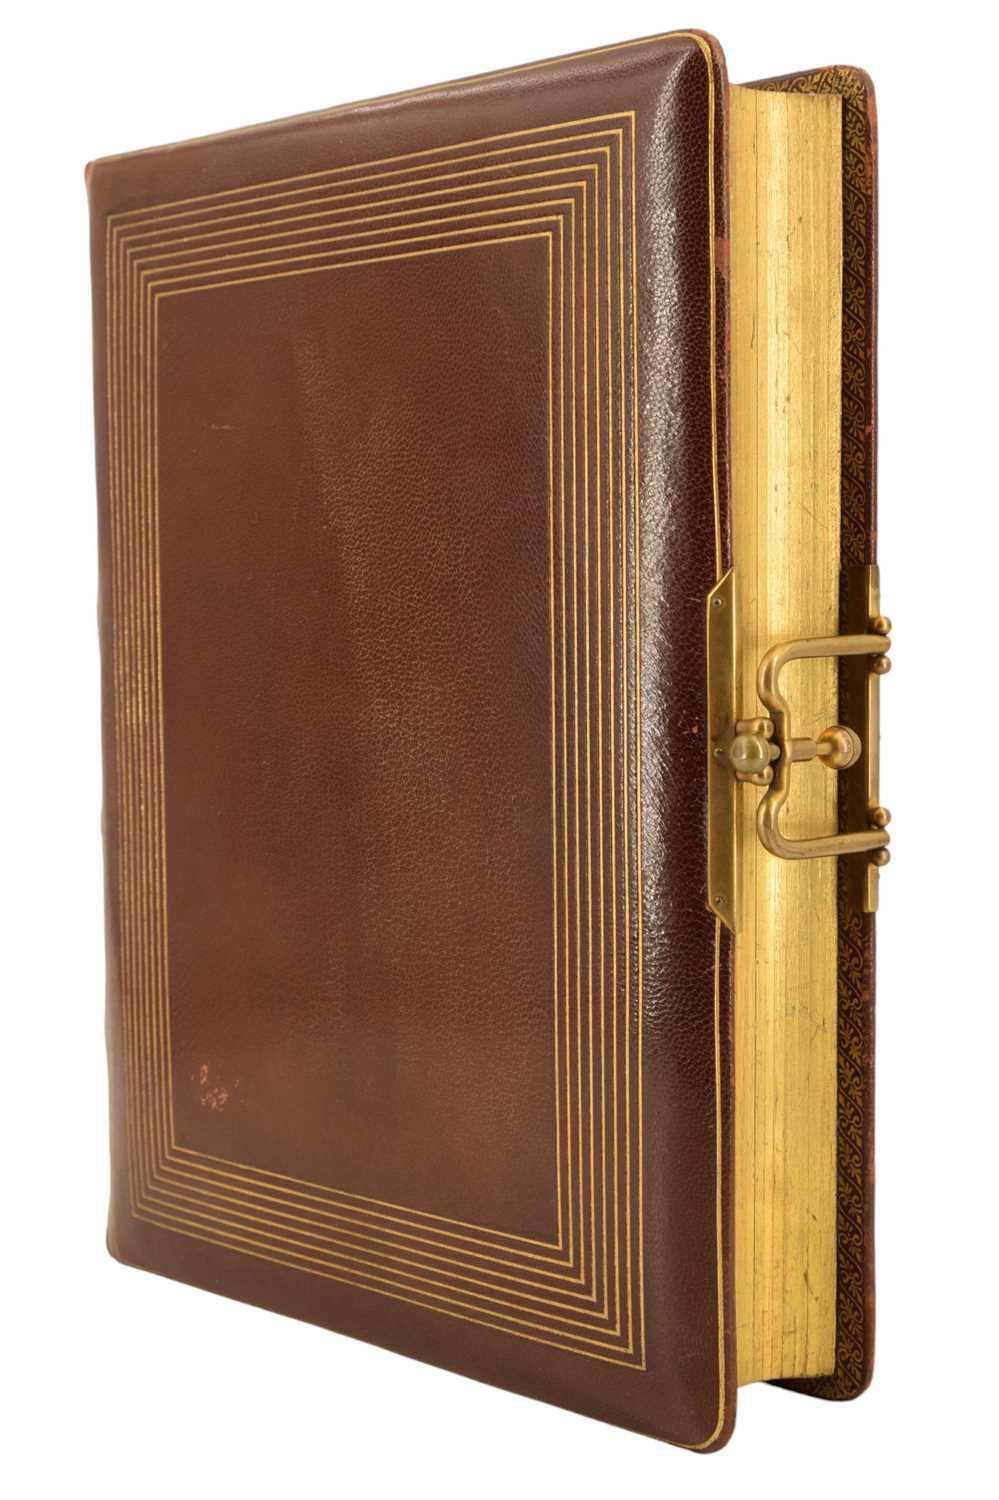 A Victorian hide-bound photograph album, 24 x 30 cm - Image 2 of 3